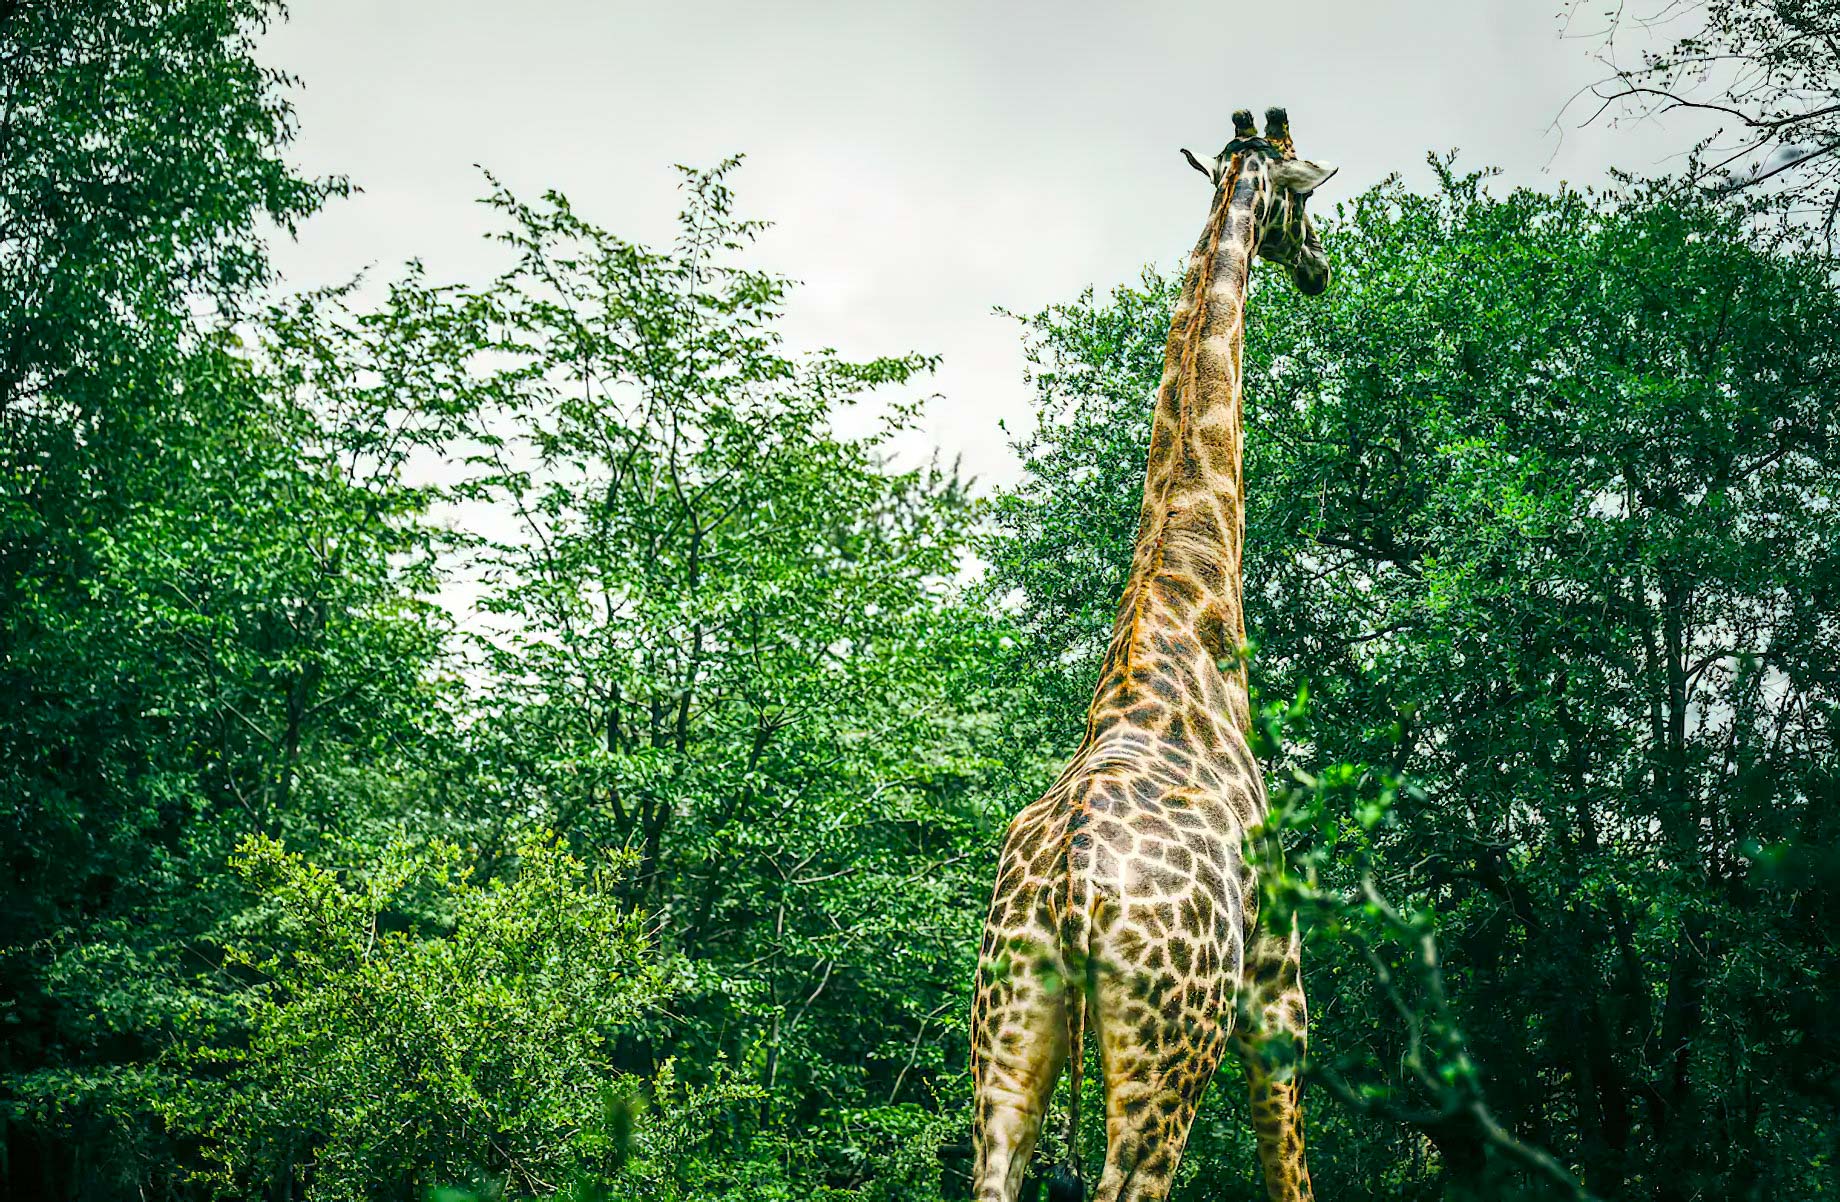 Avani Victoria Falls Resort – Livingstone, Zambia – Giraffe